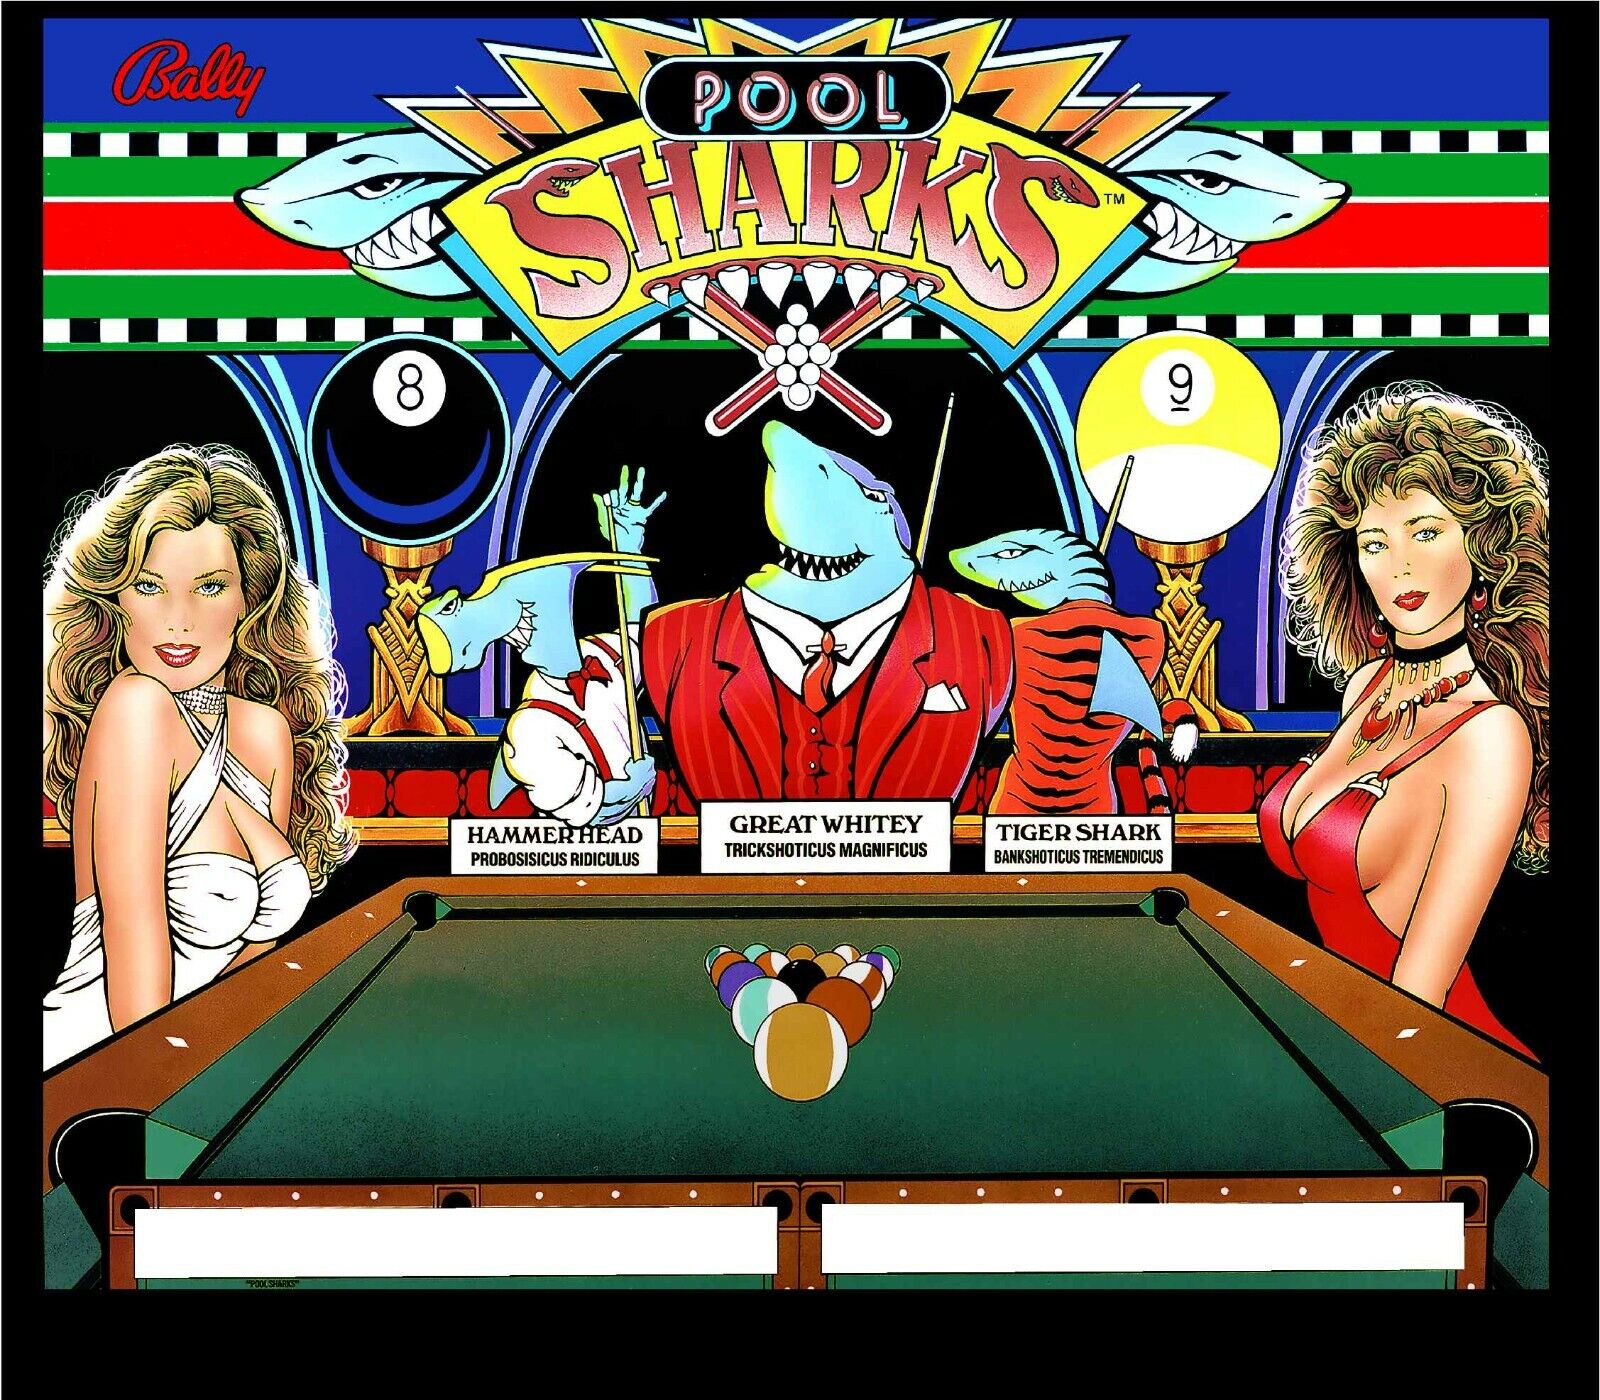 Pool Sharks (Bally, 1990) BG